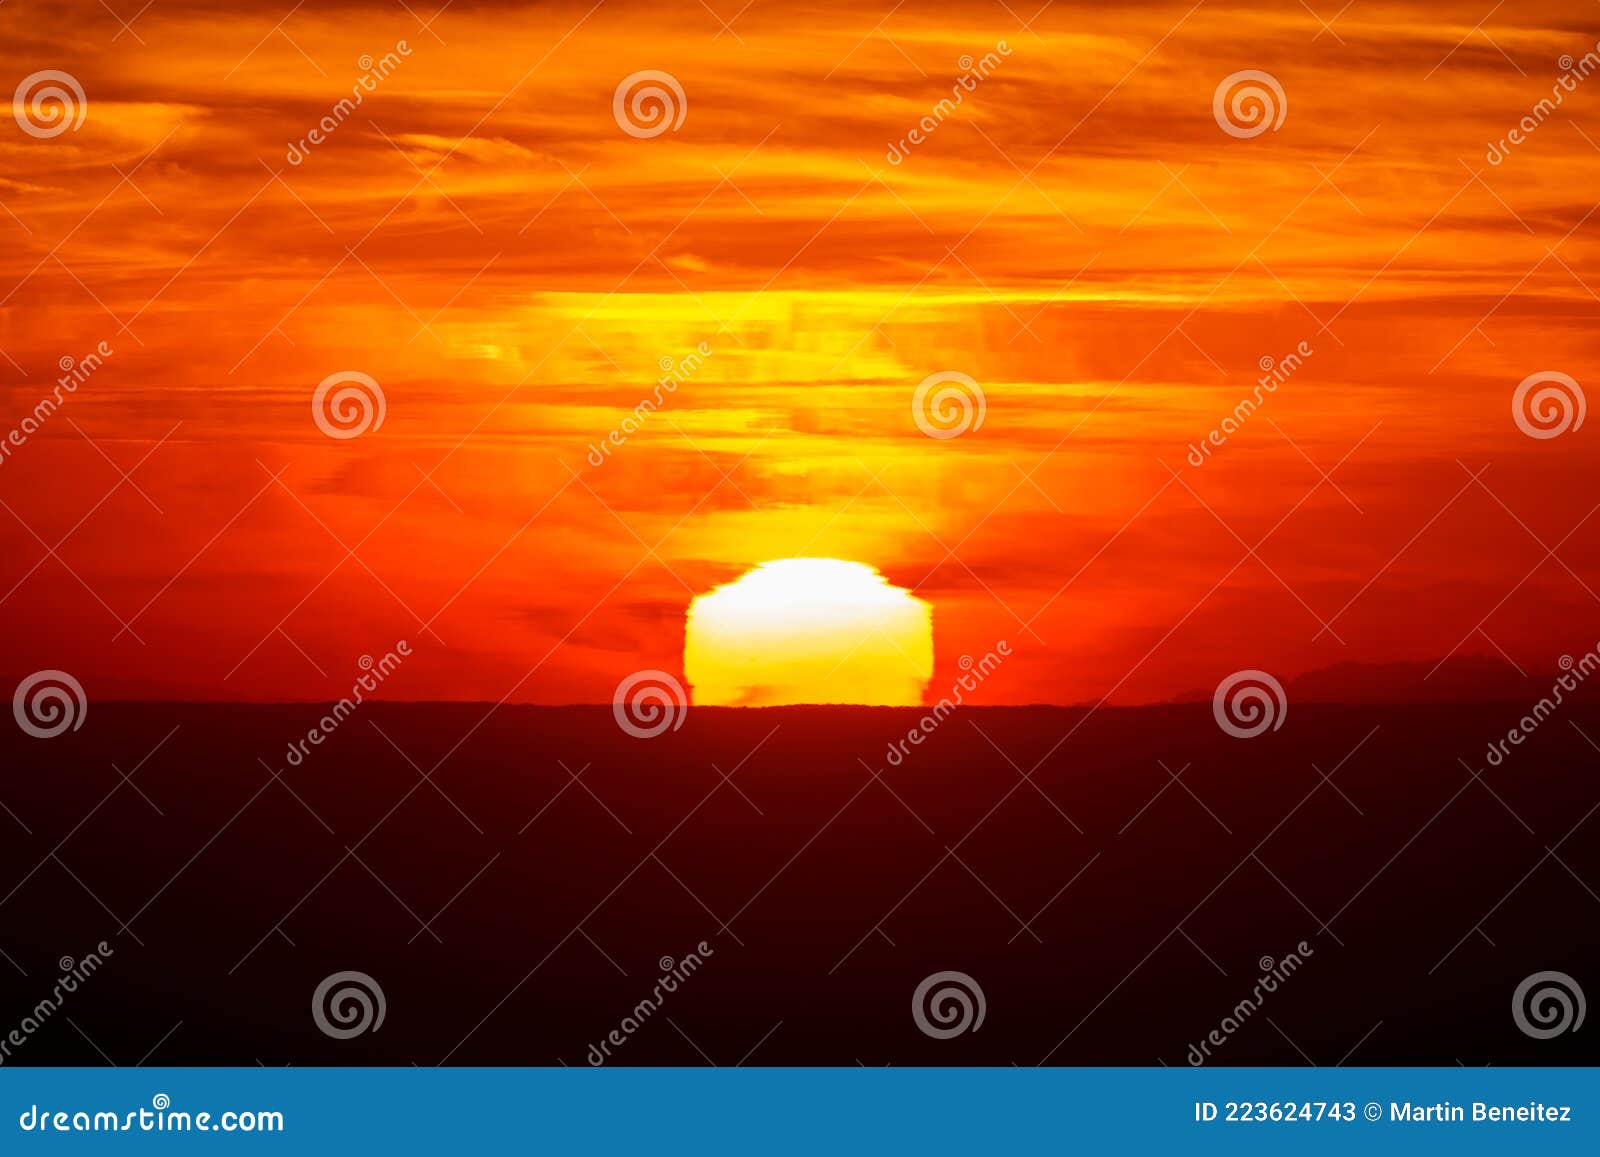 amazing sunset scenary in mountain